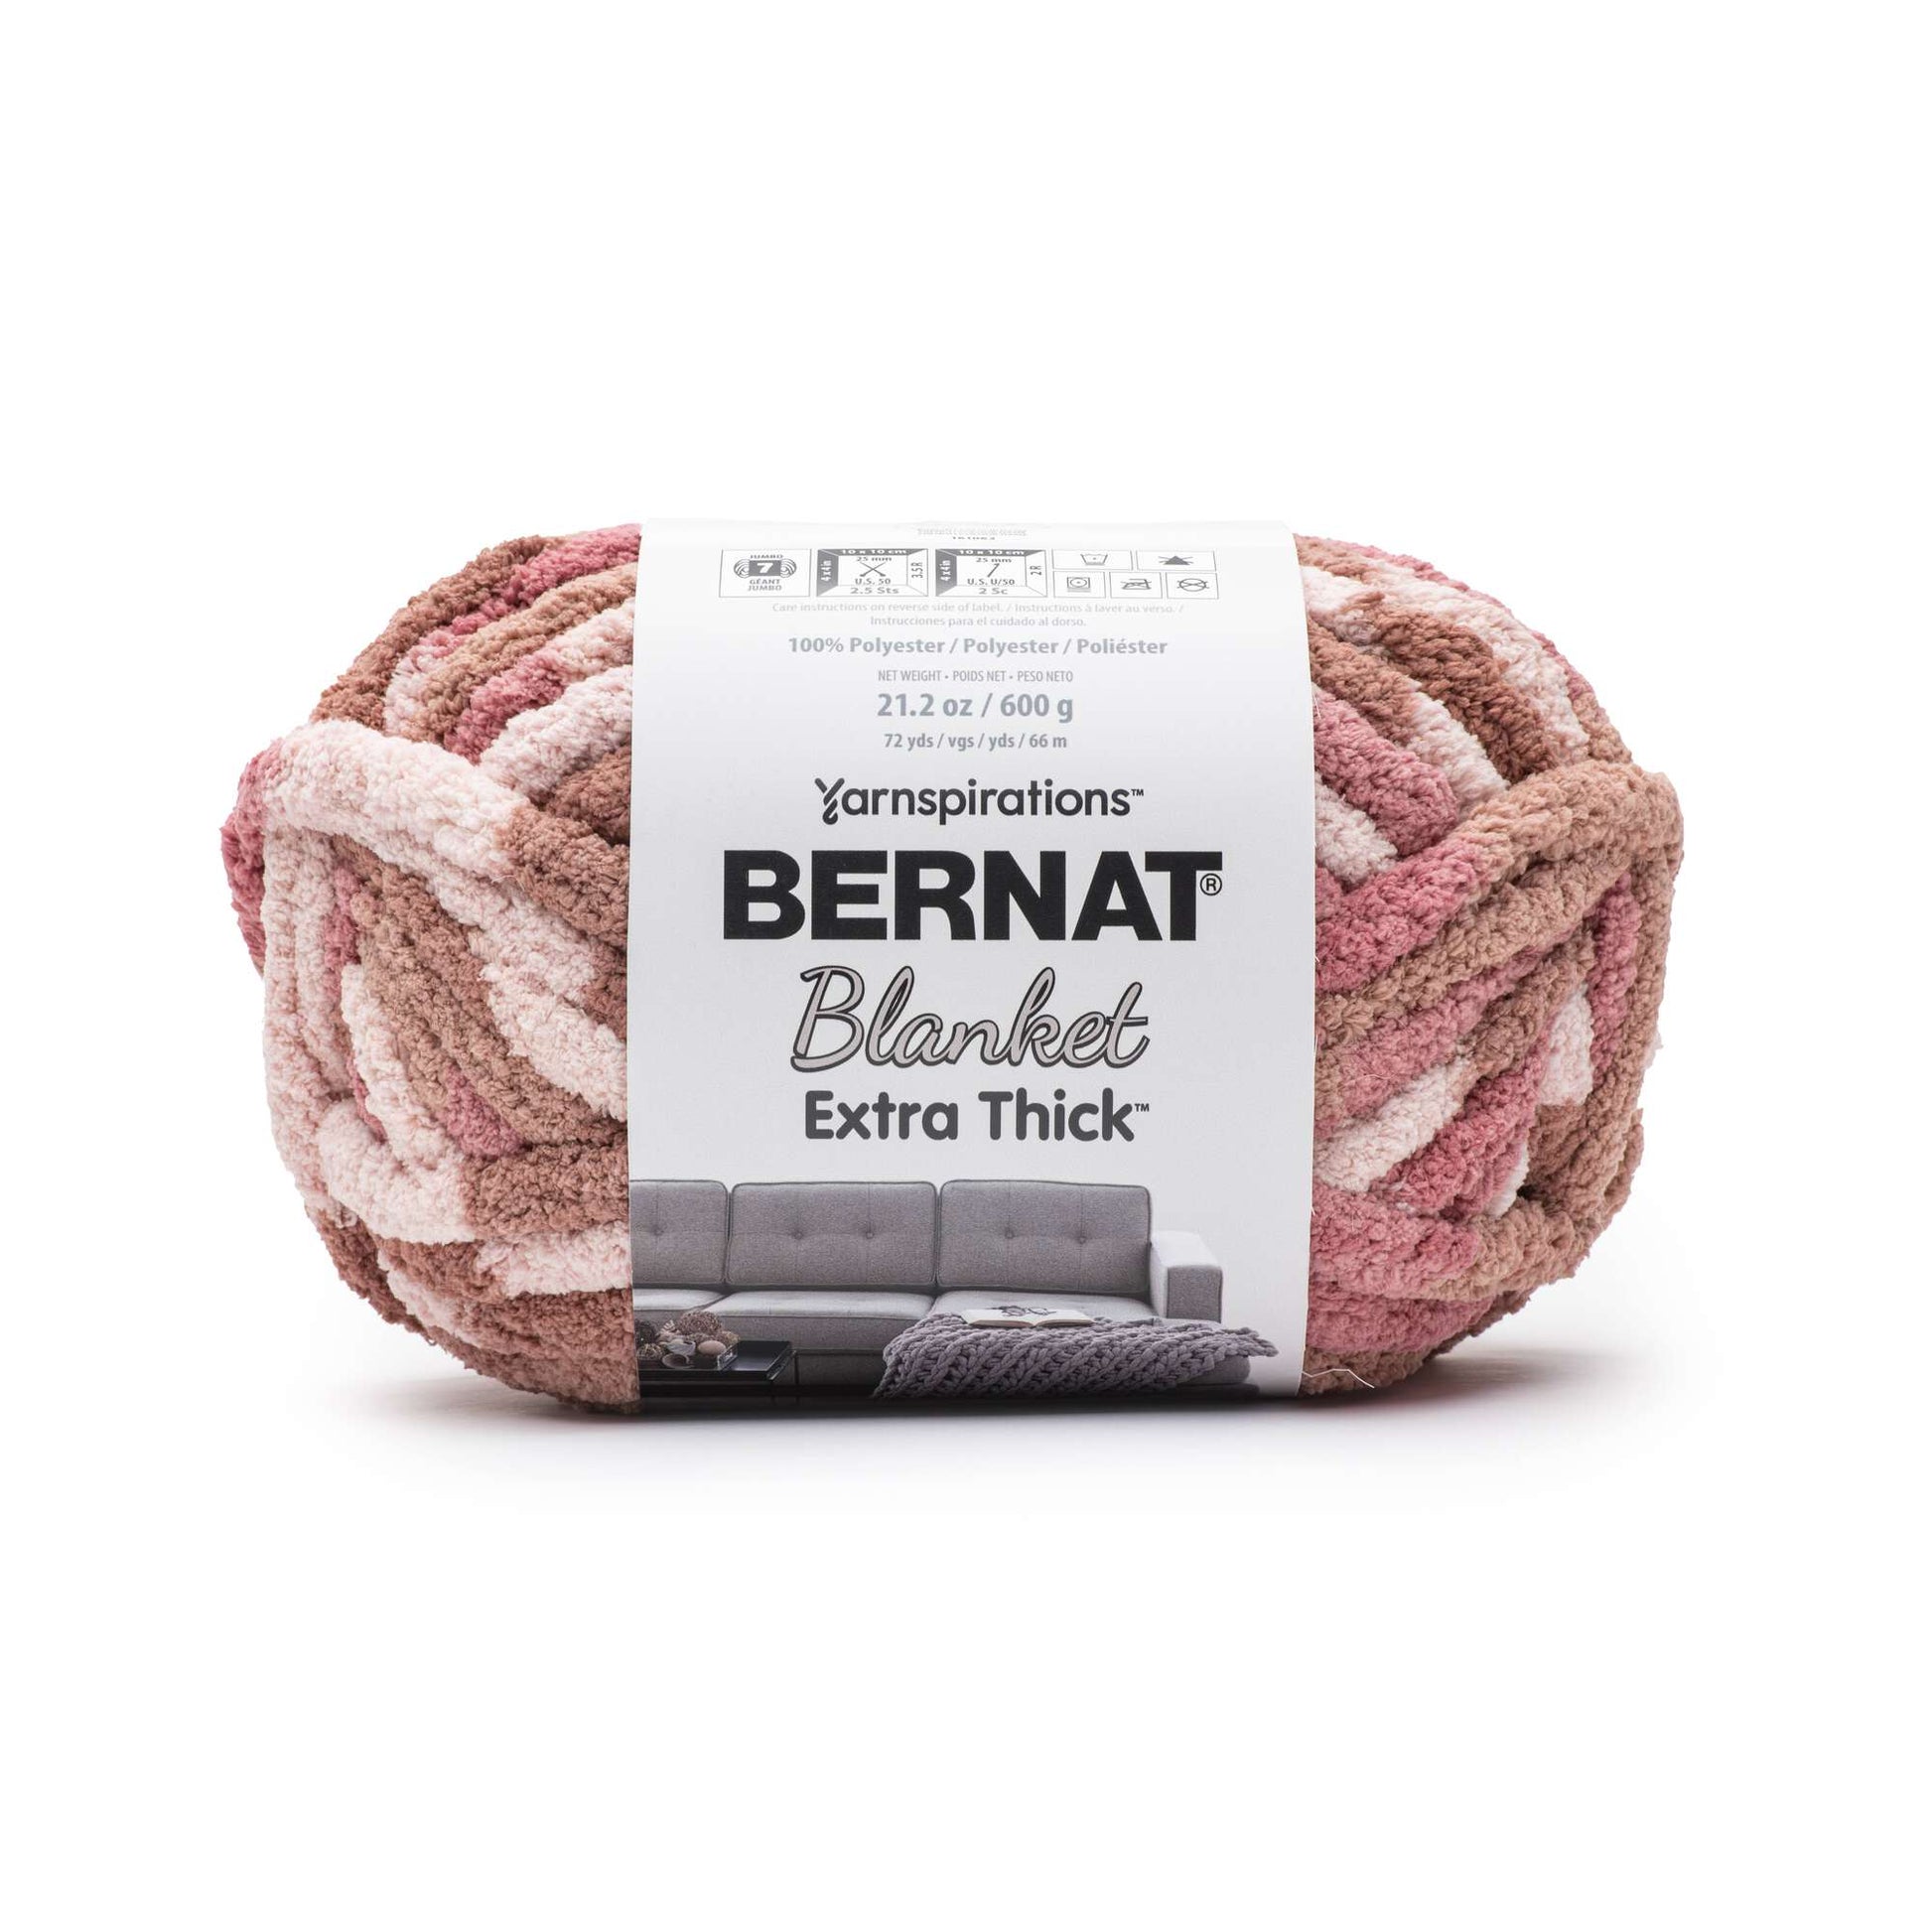 Bernat Blanket Extra Thick Yarn (600g/21.2oz) - Discontinued Shades Petal